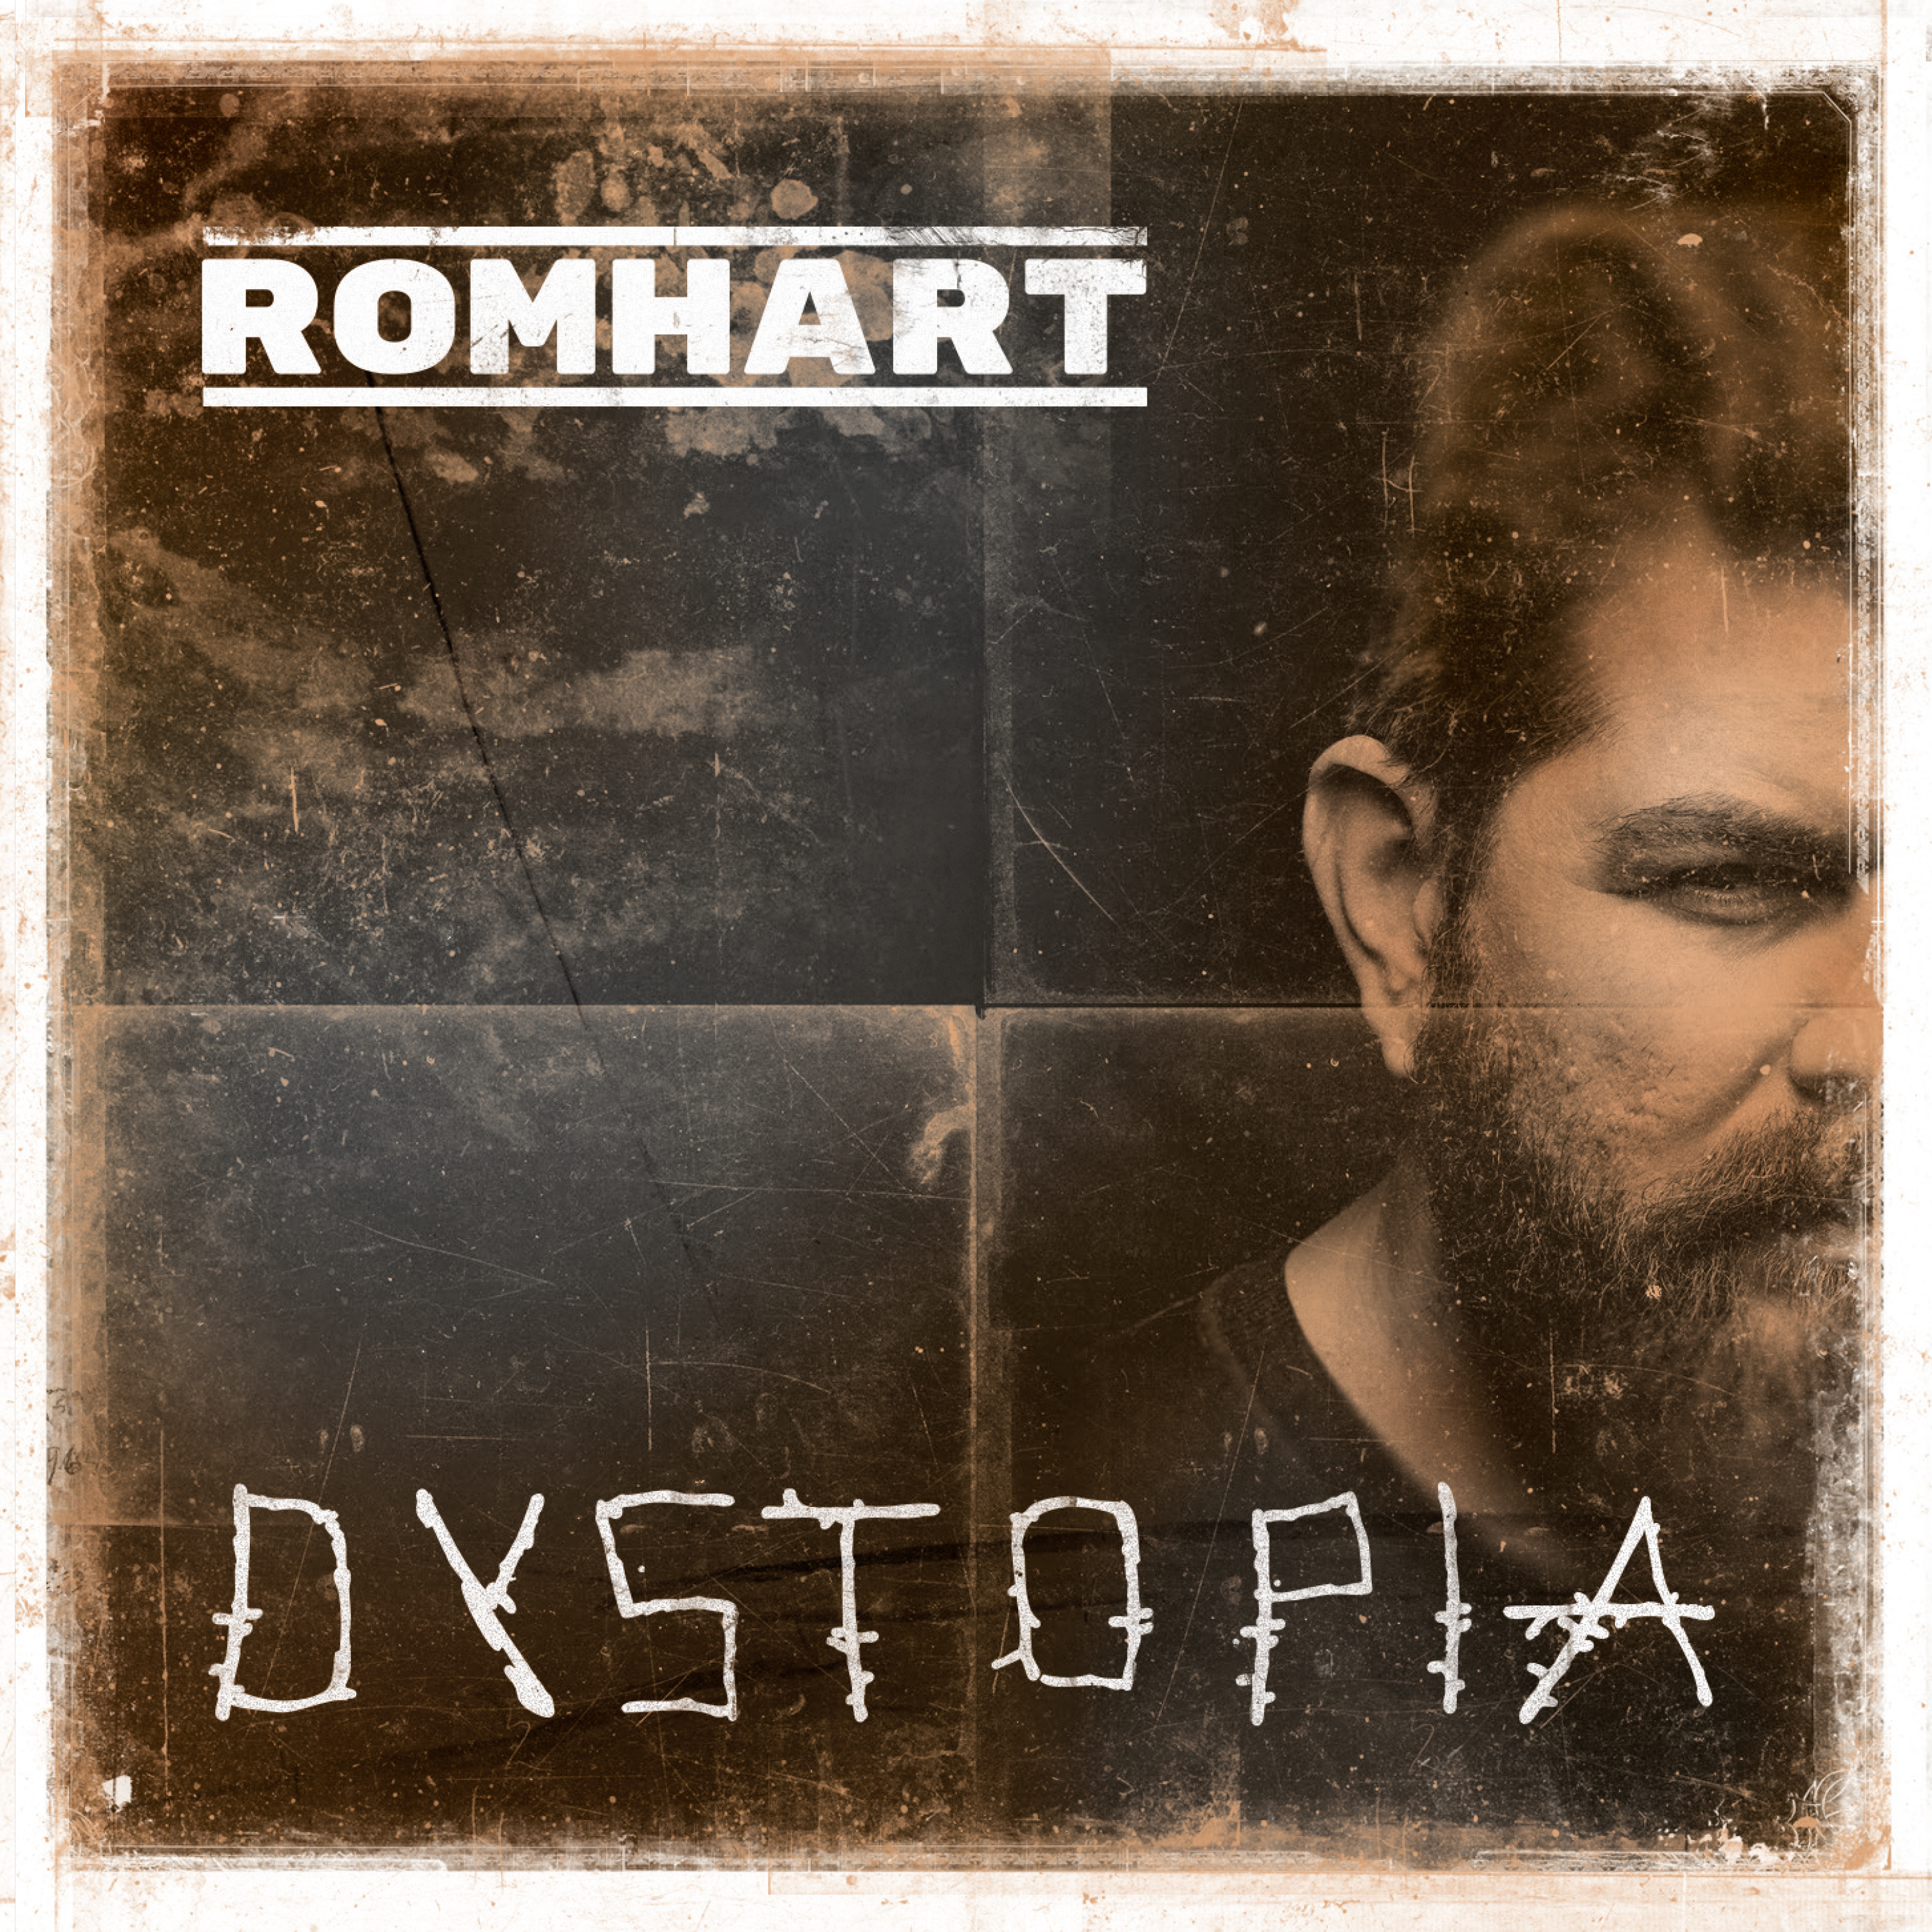 Romhart - Dystopia - Cover 3000x3000.jpg